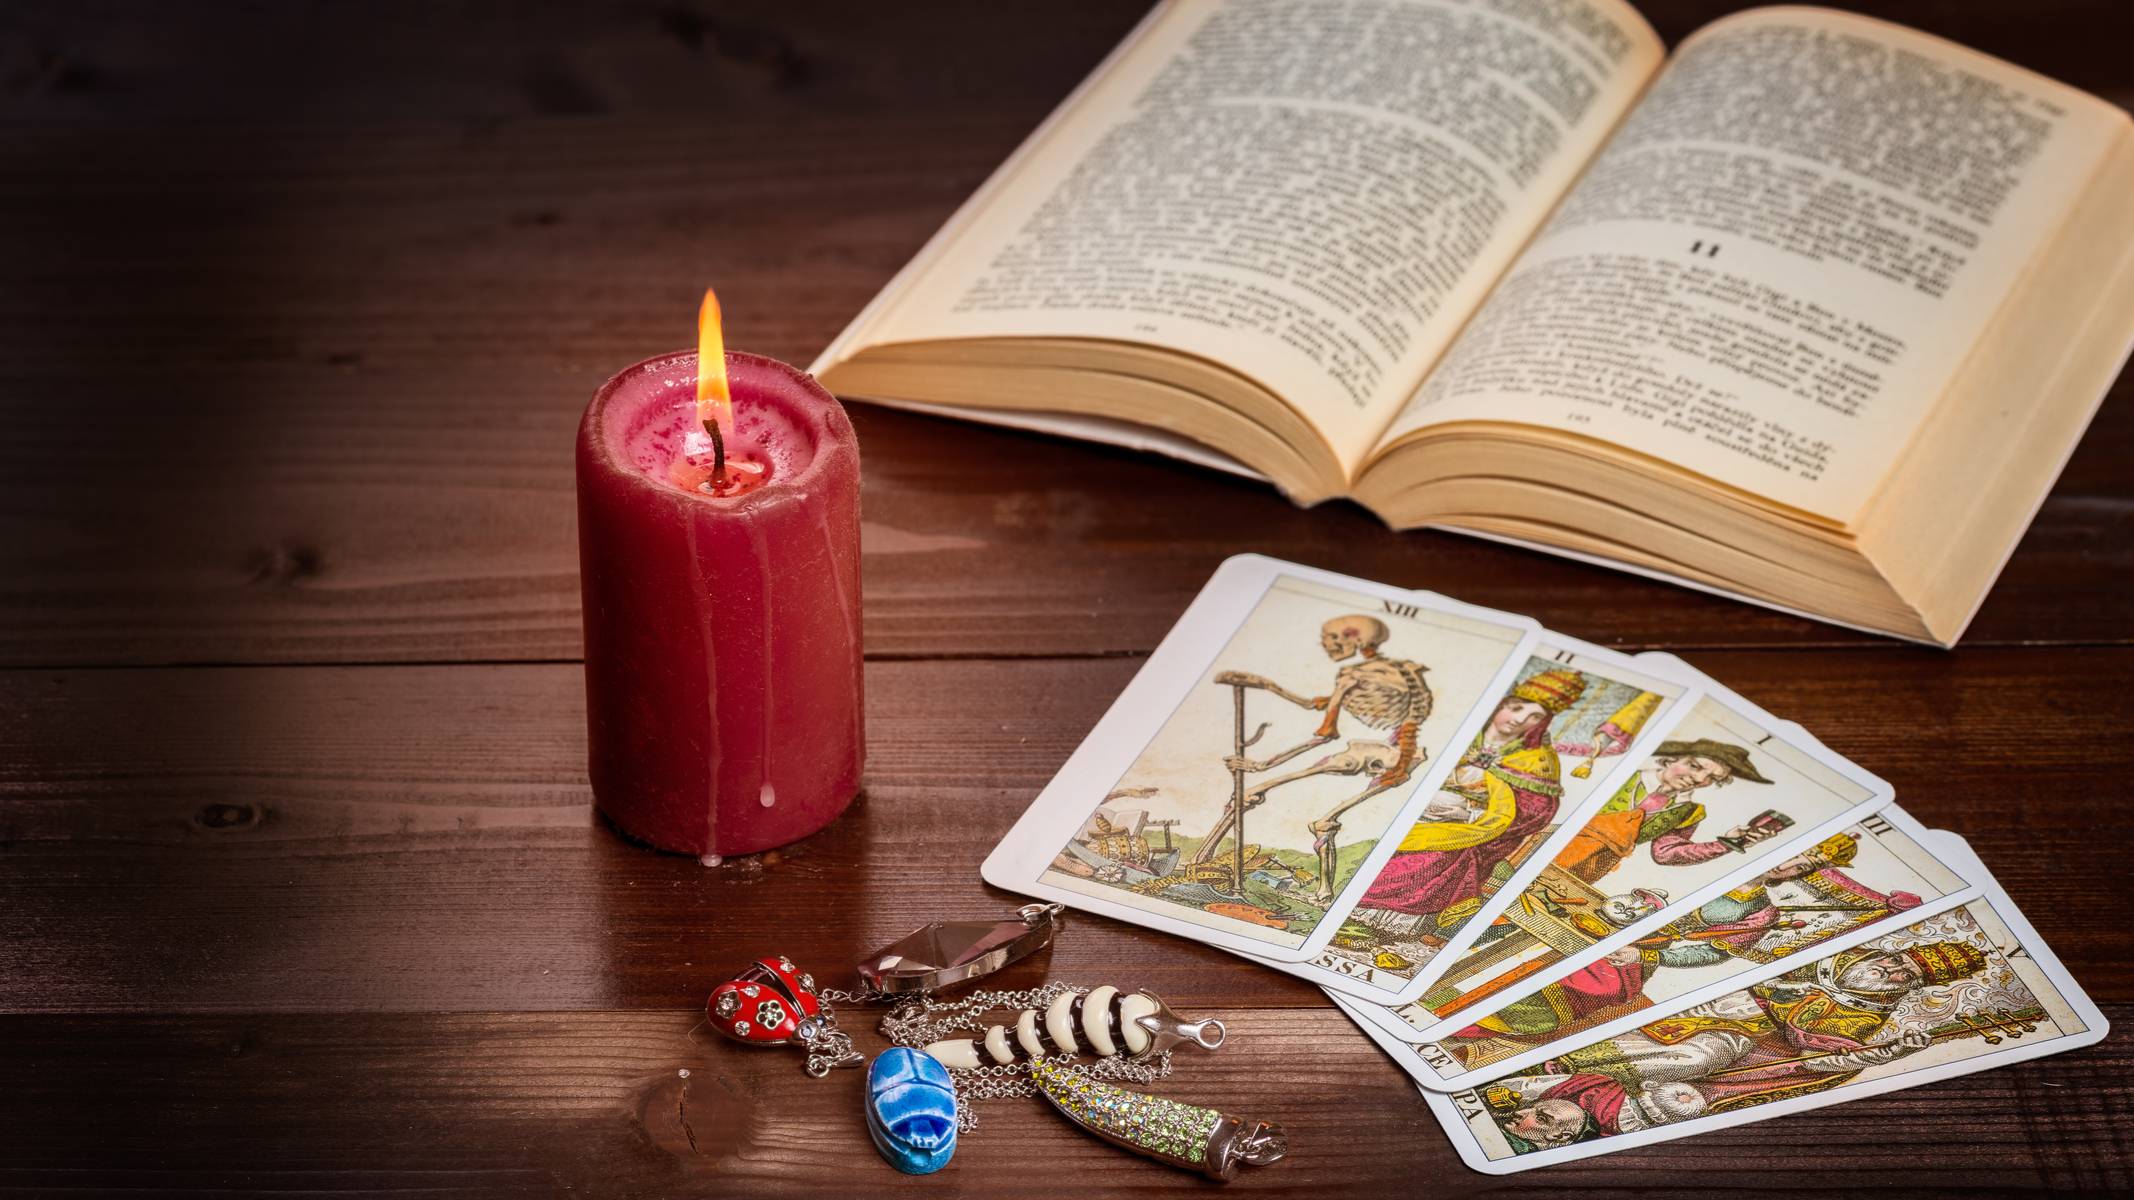 Магия таро книга. Таро и свечи. Карты Таро на столе. Книга гадание на Таро. Картинки с картами Таро и свечами.